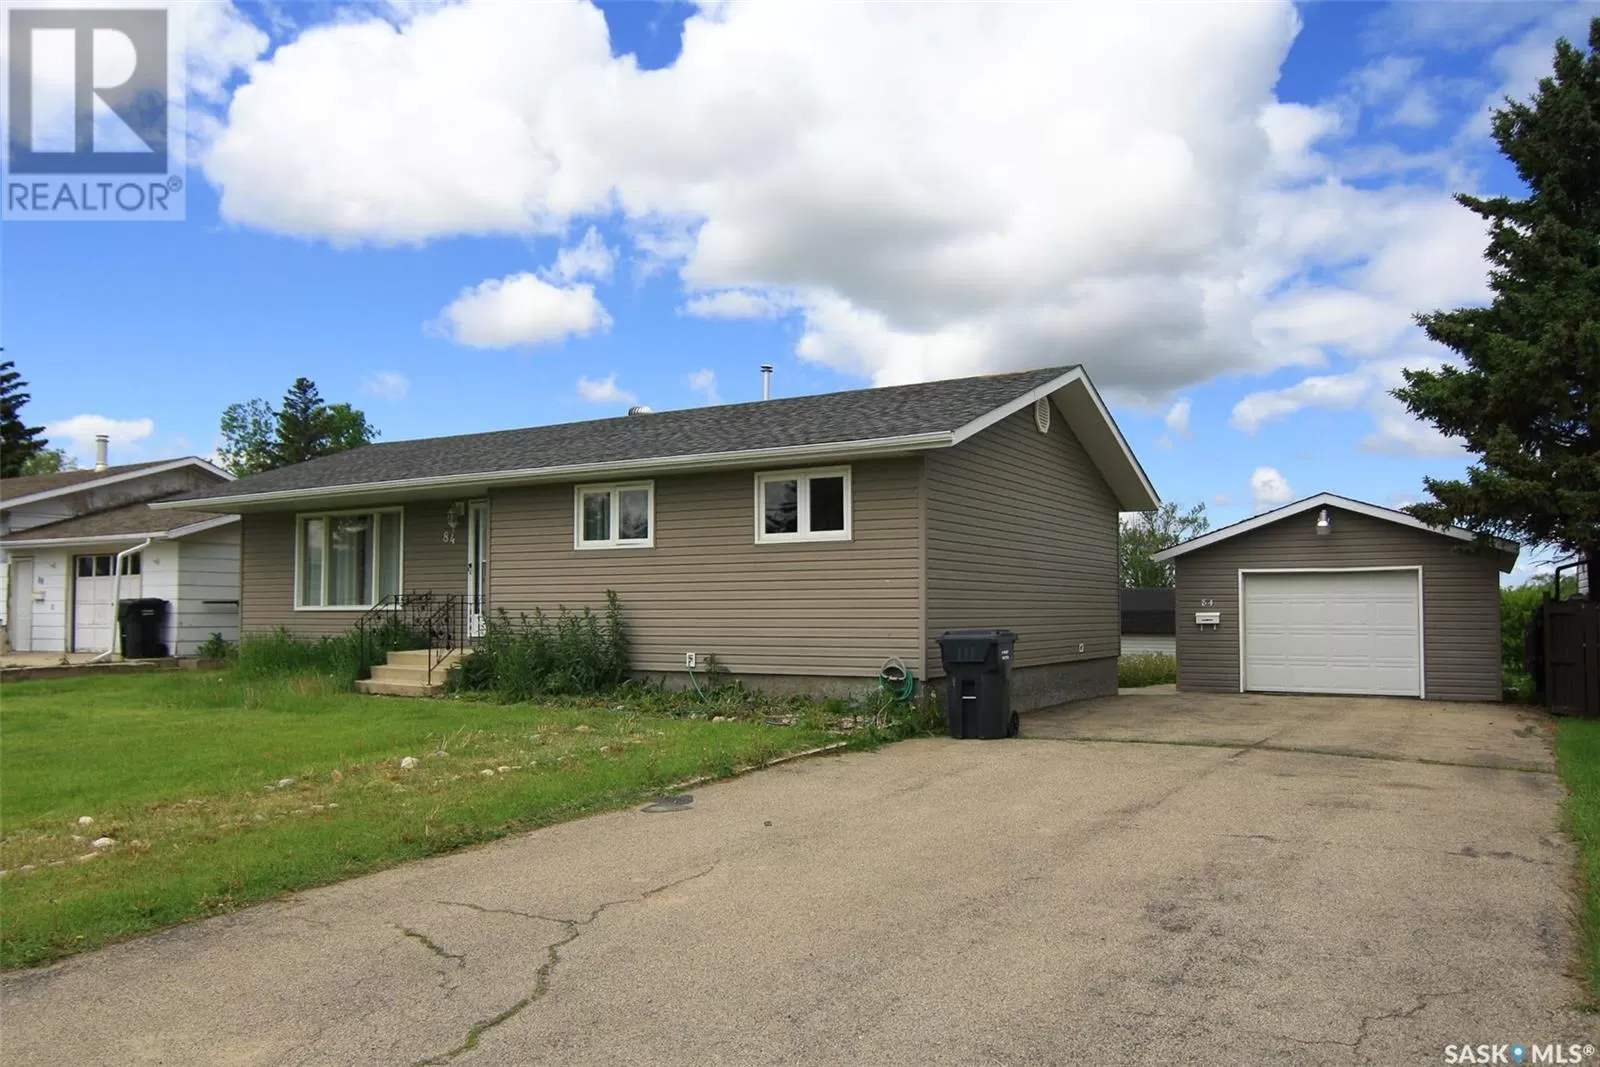 House for rent: 84 Clarewood Crescent, Yorkton, Saskatchewan S3N 2V2